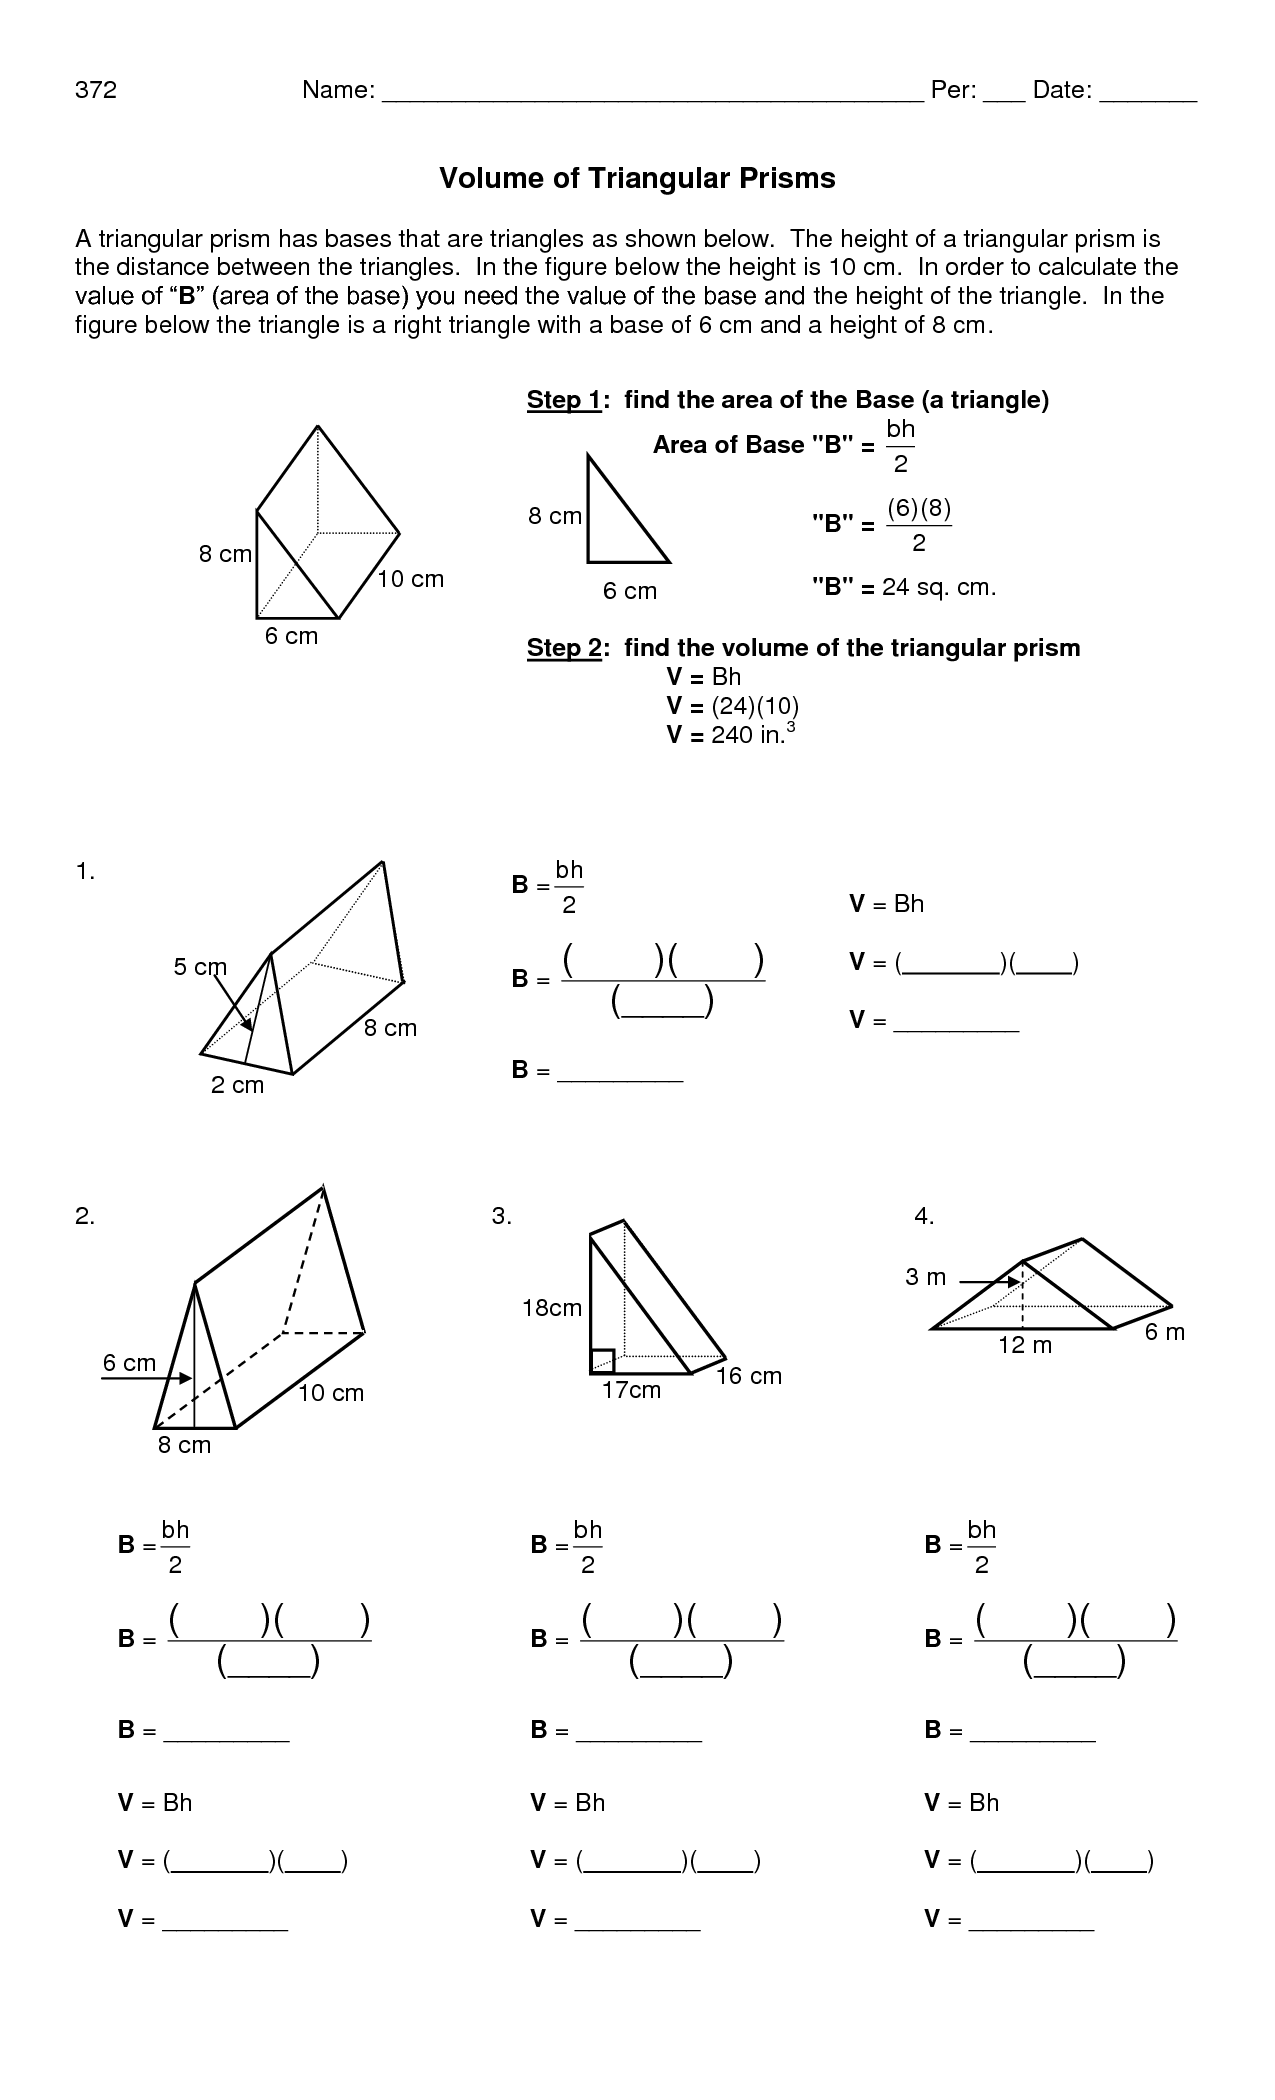 mathworksheets4kids-volume-of-triangular-prism-answers-atilacancer